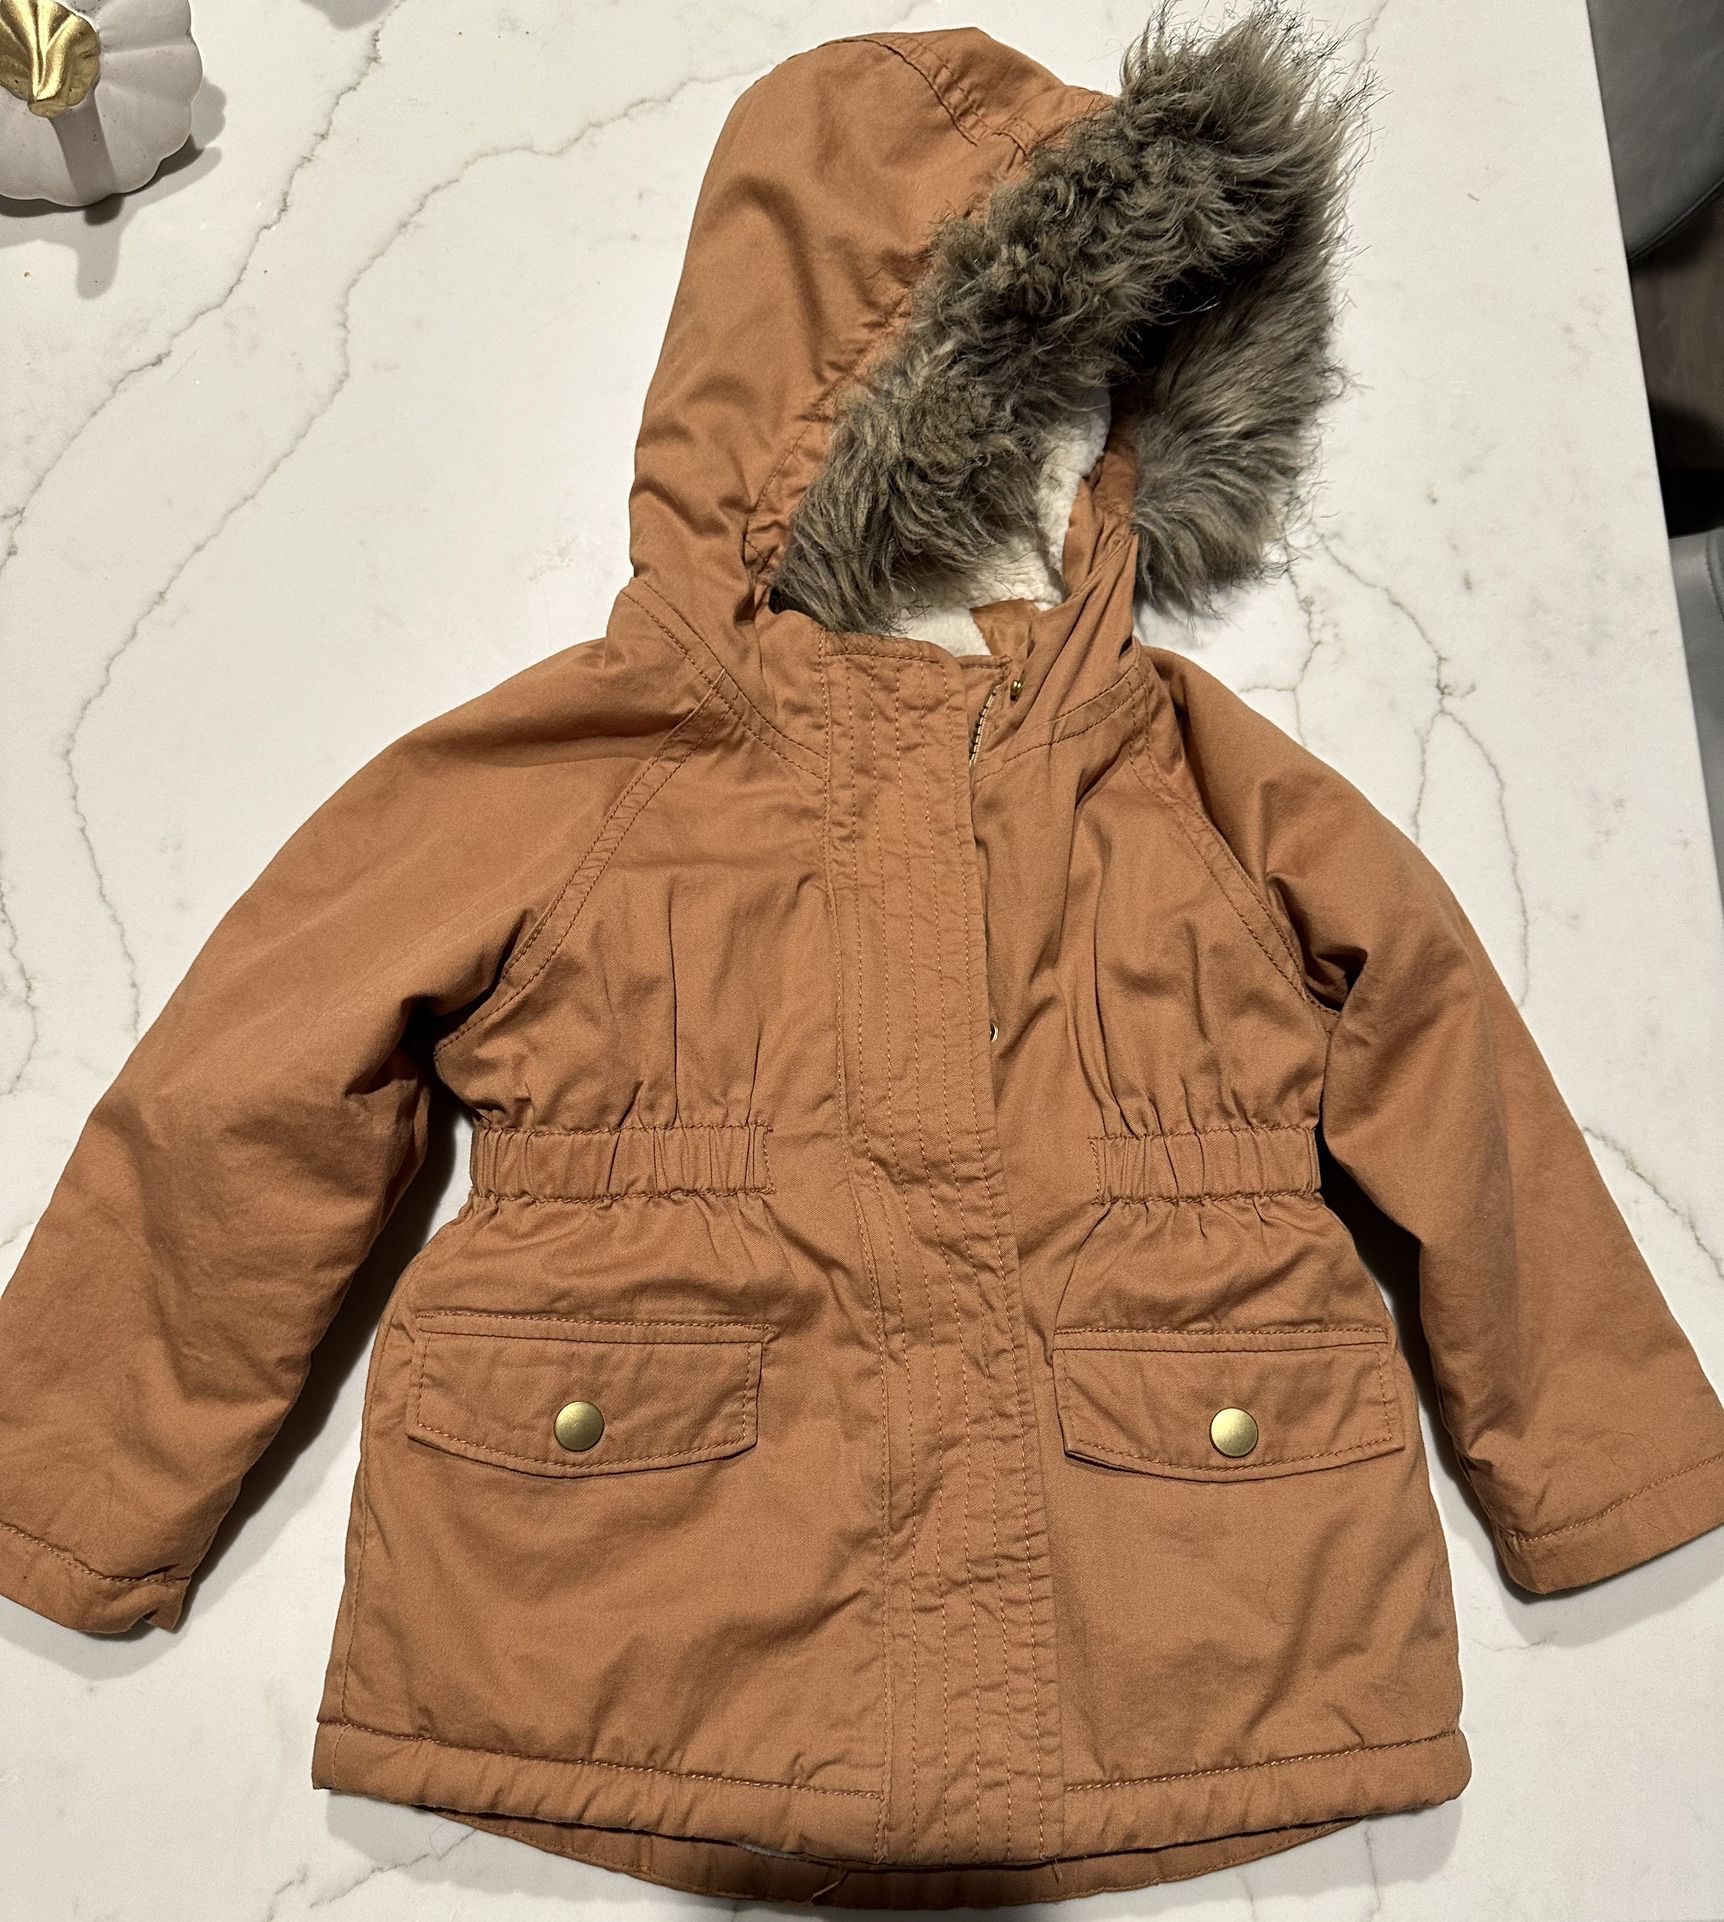 Toddler Girls 3T Coat Jacket $5